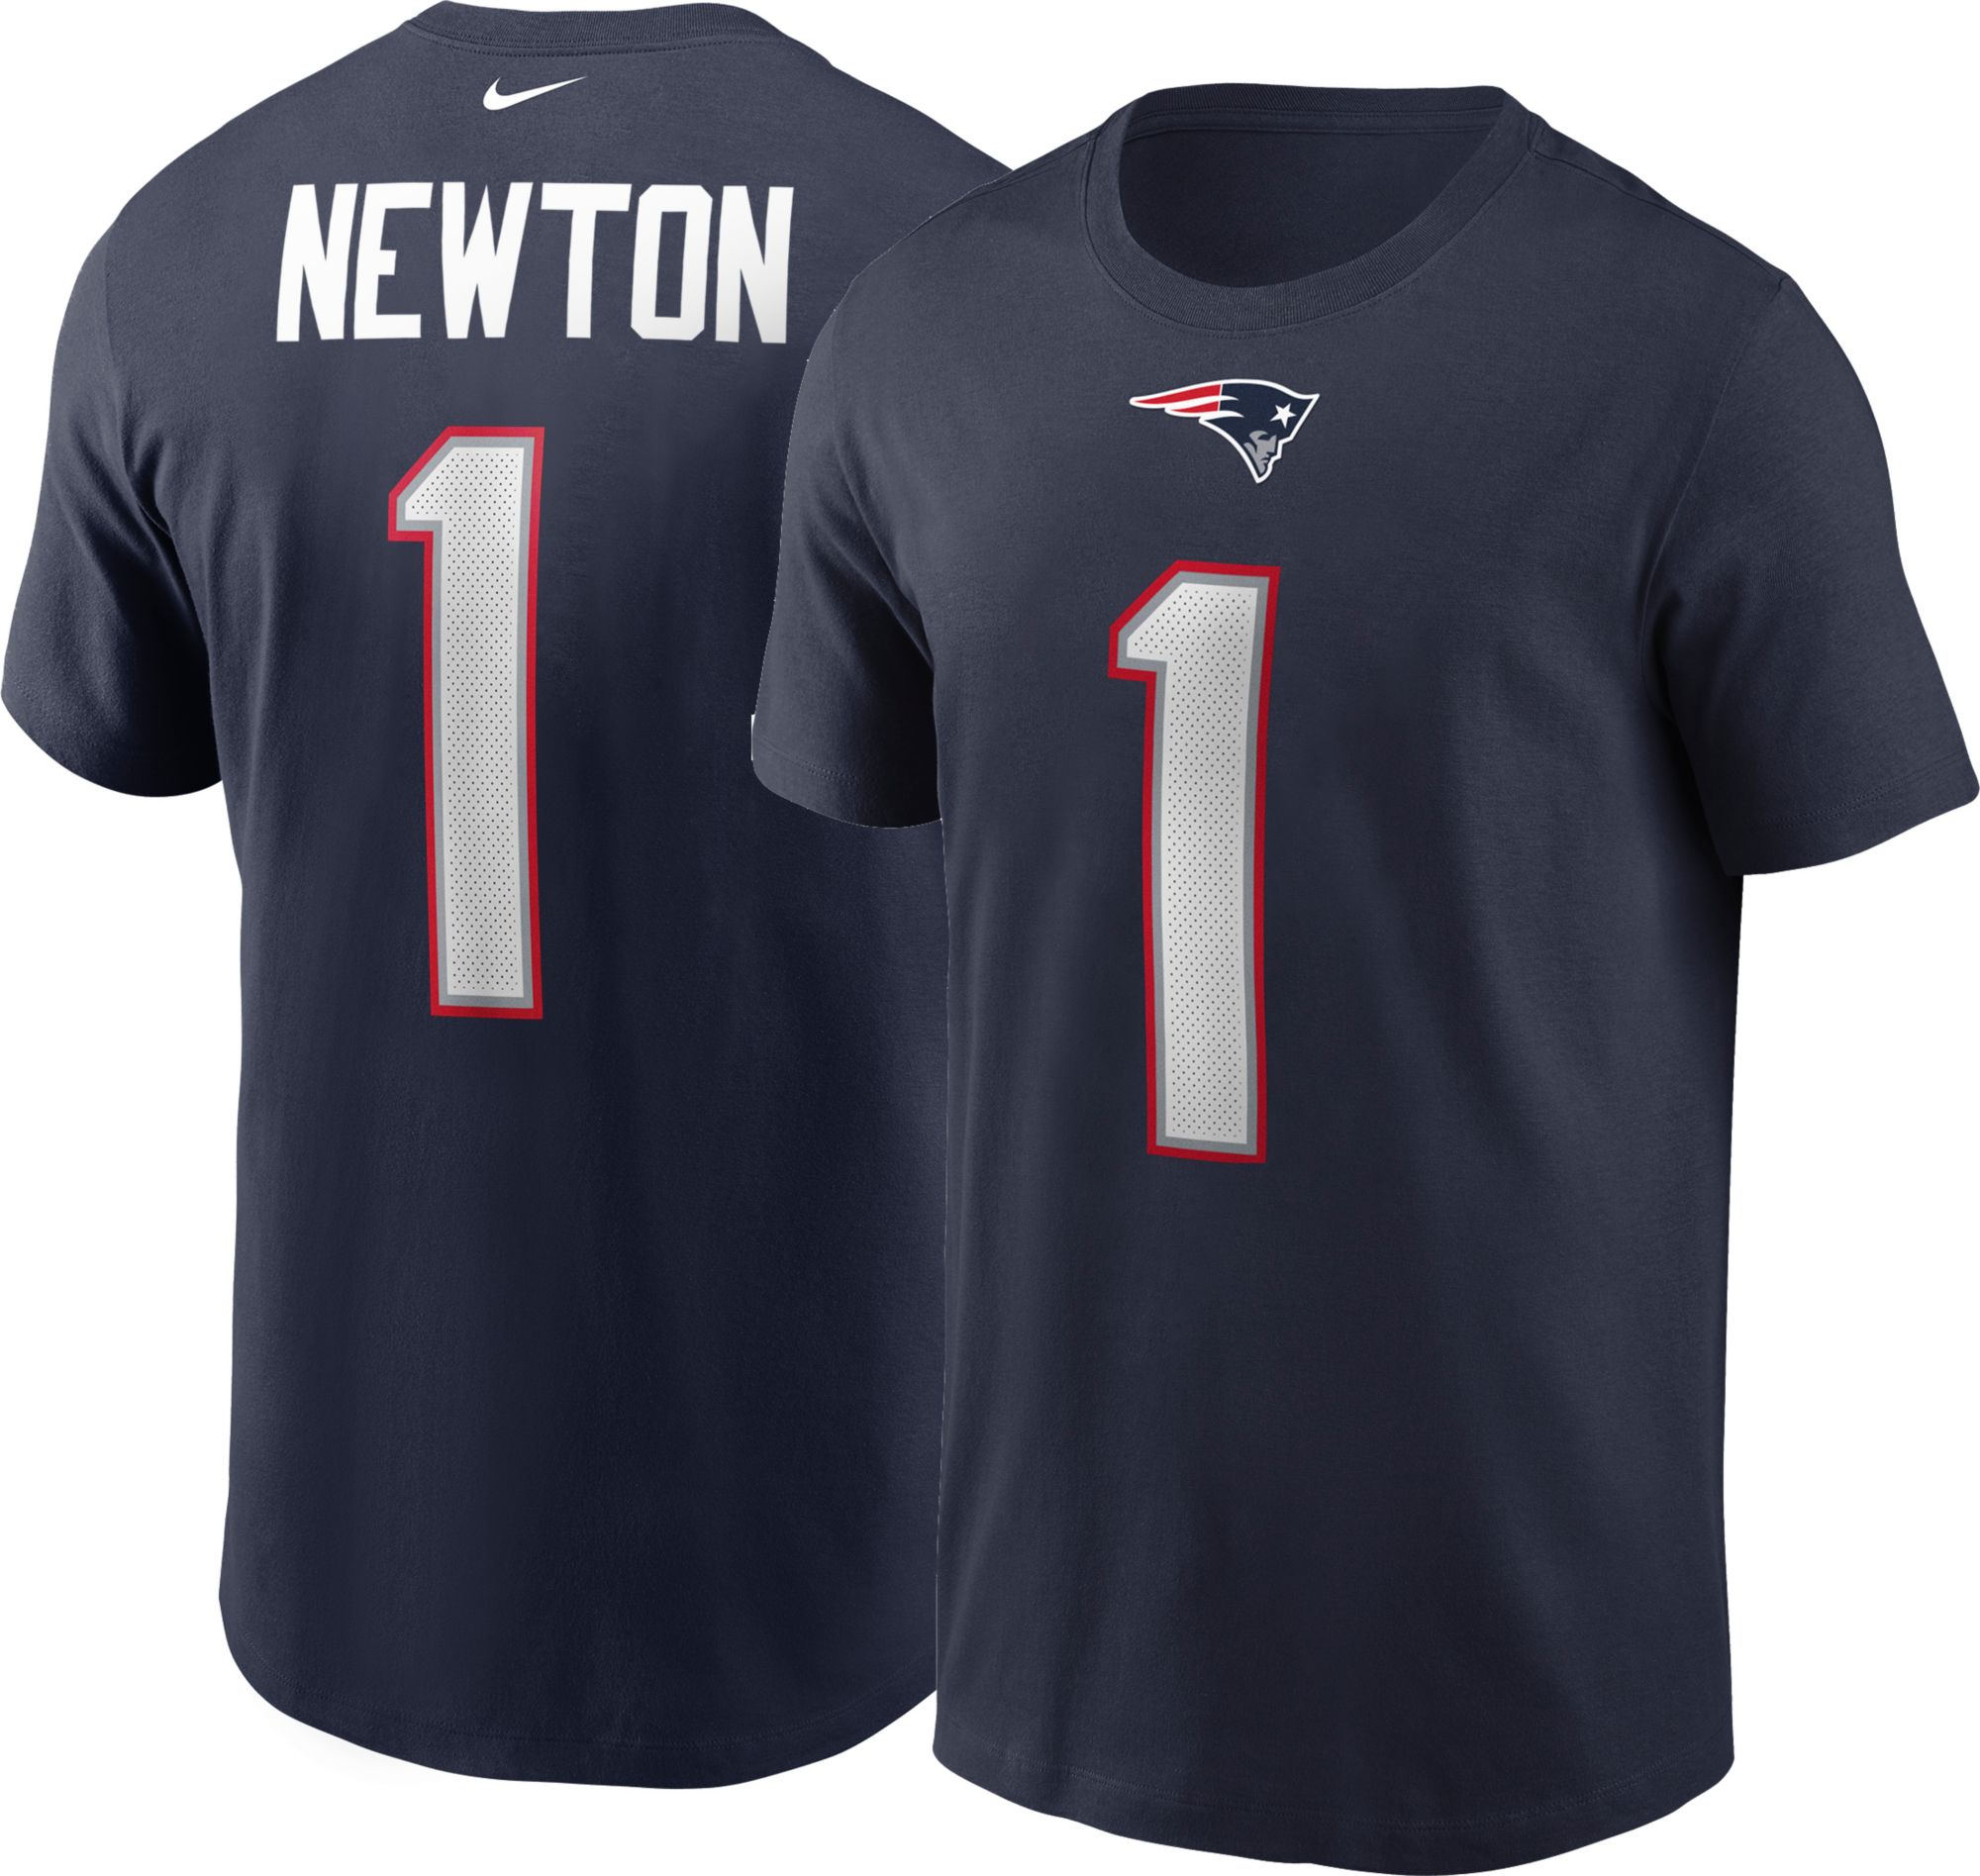 cam newton patriots apparel